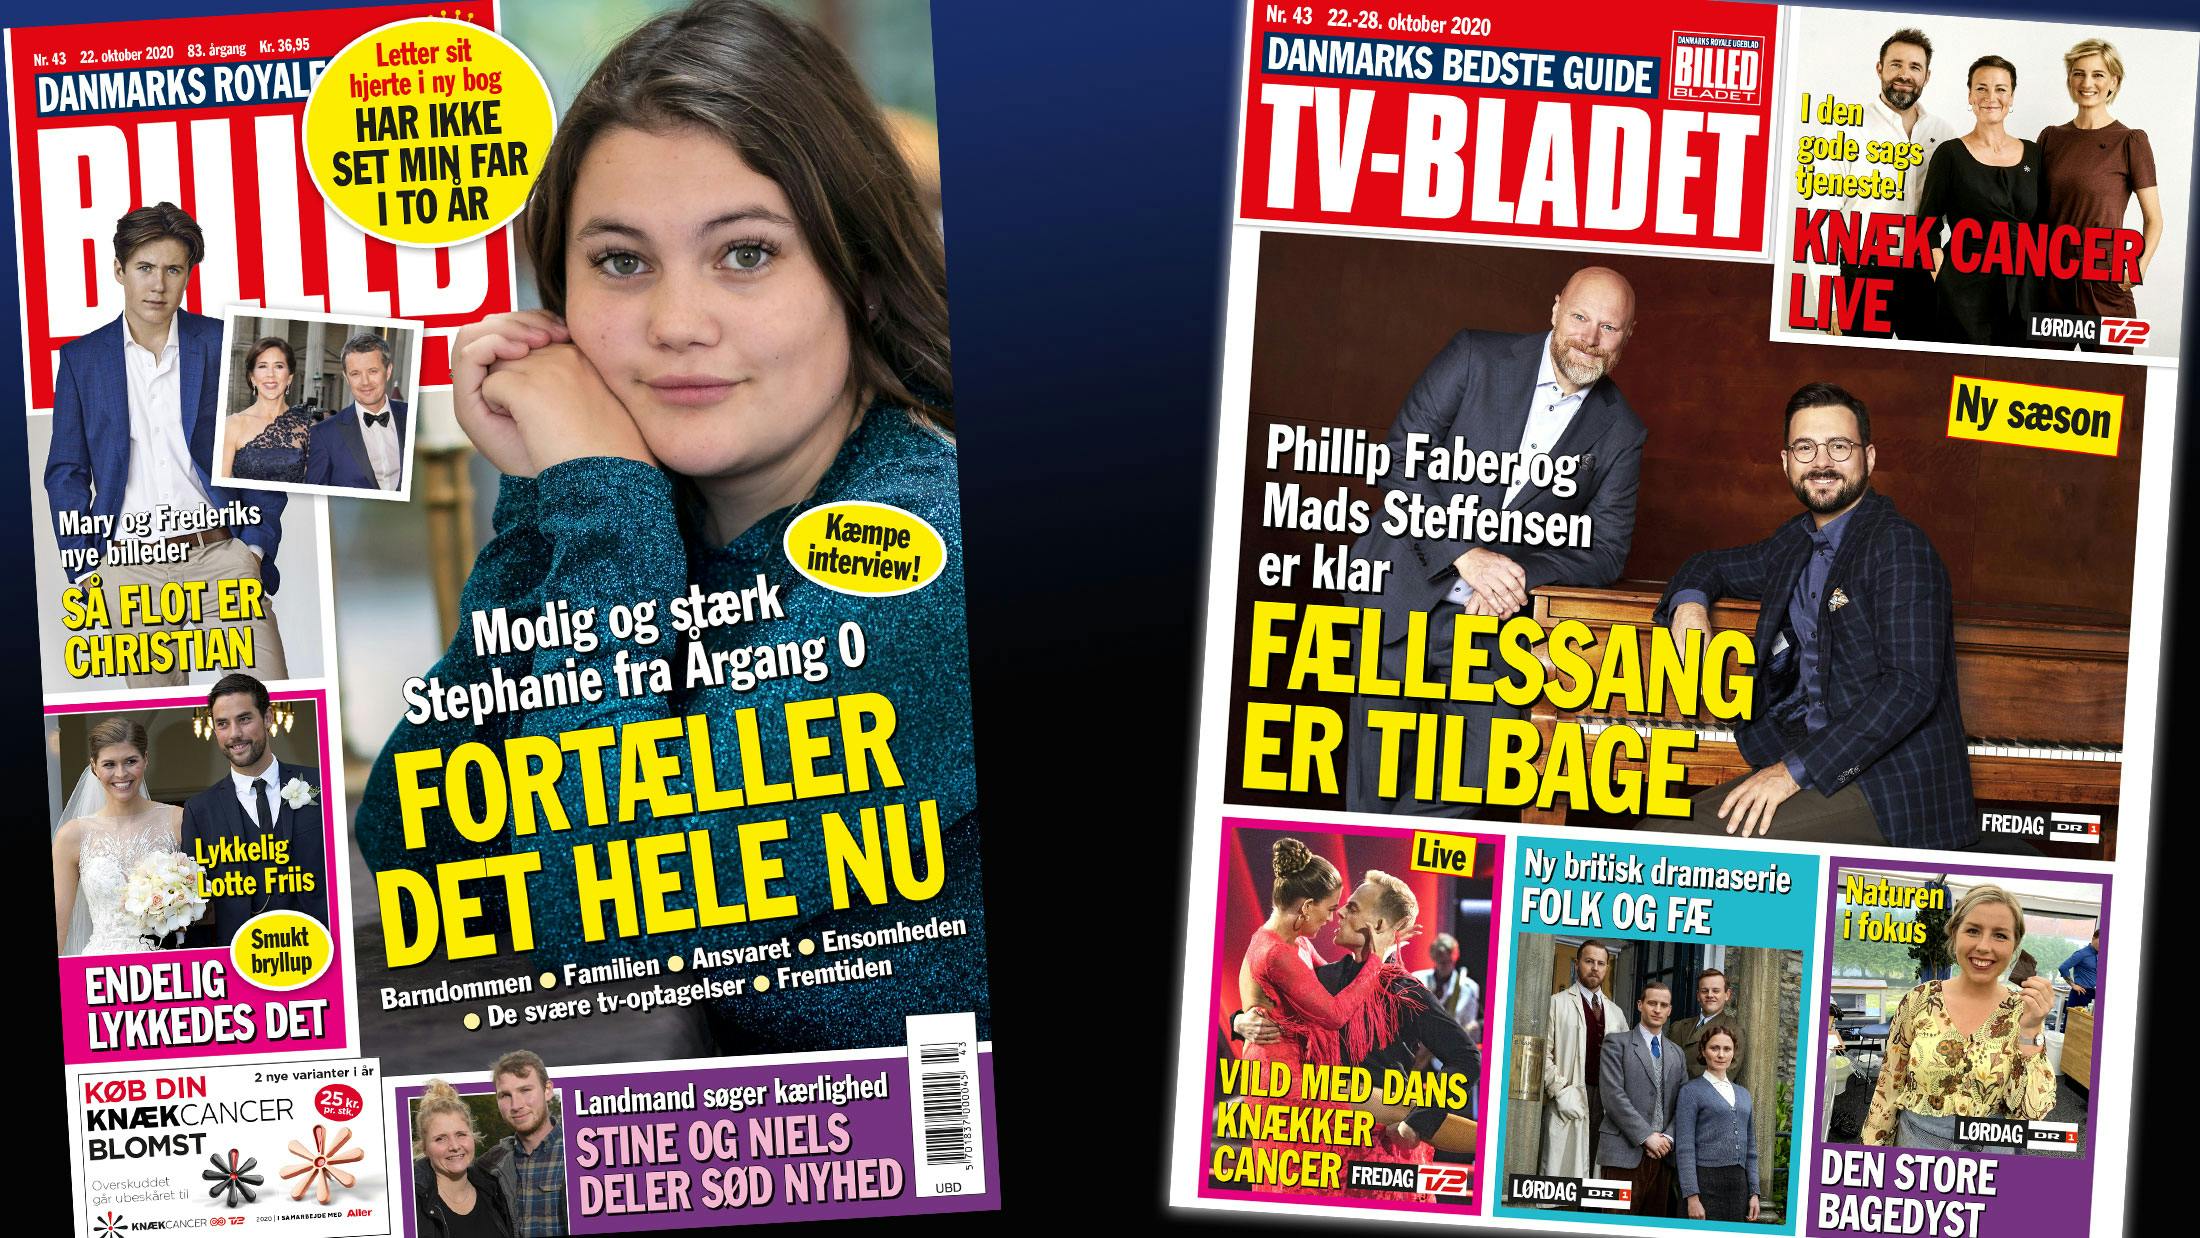 https://imgix.billedbladet.dk/webgrafik_bb43-forsider_4.jpg